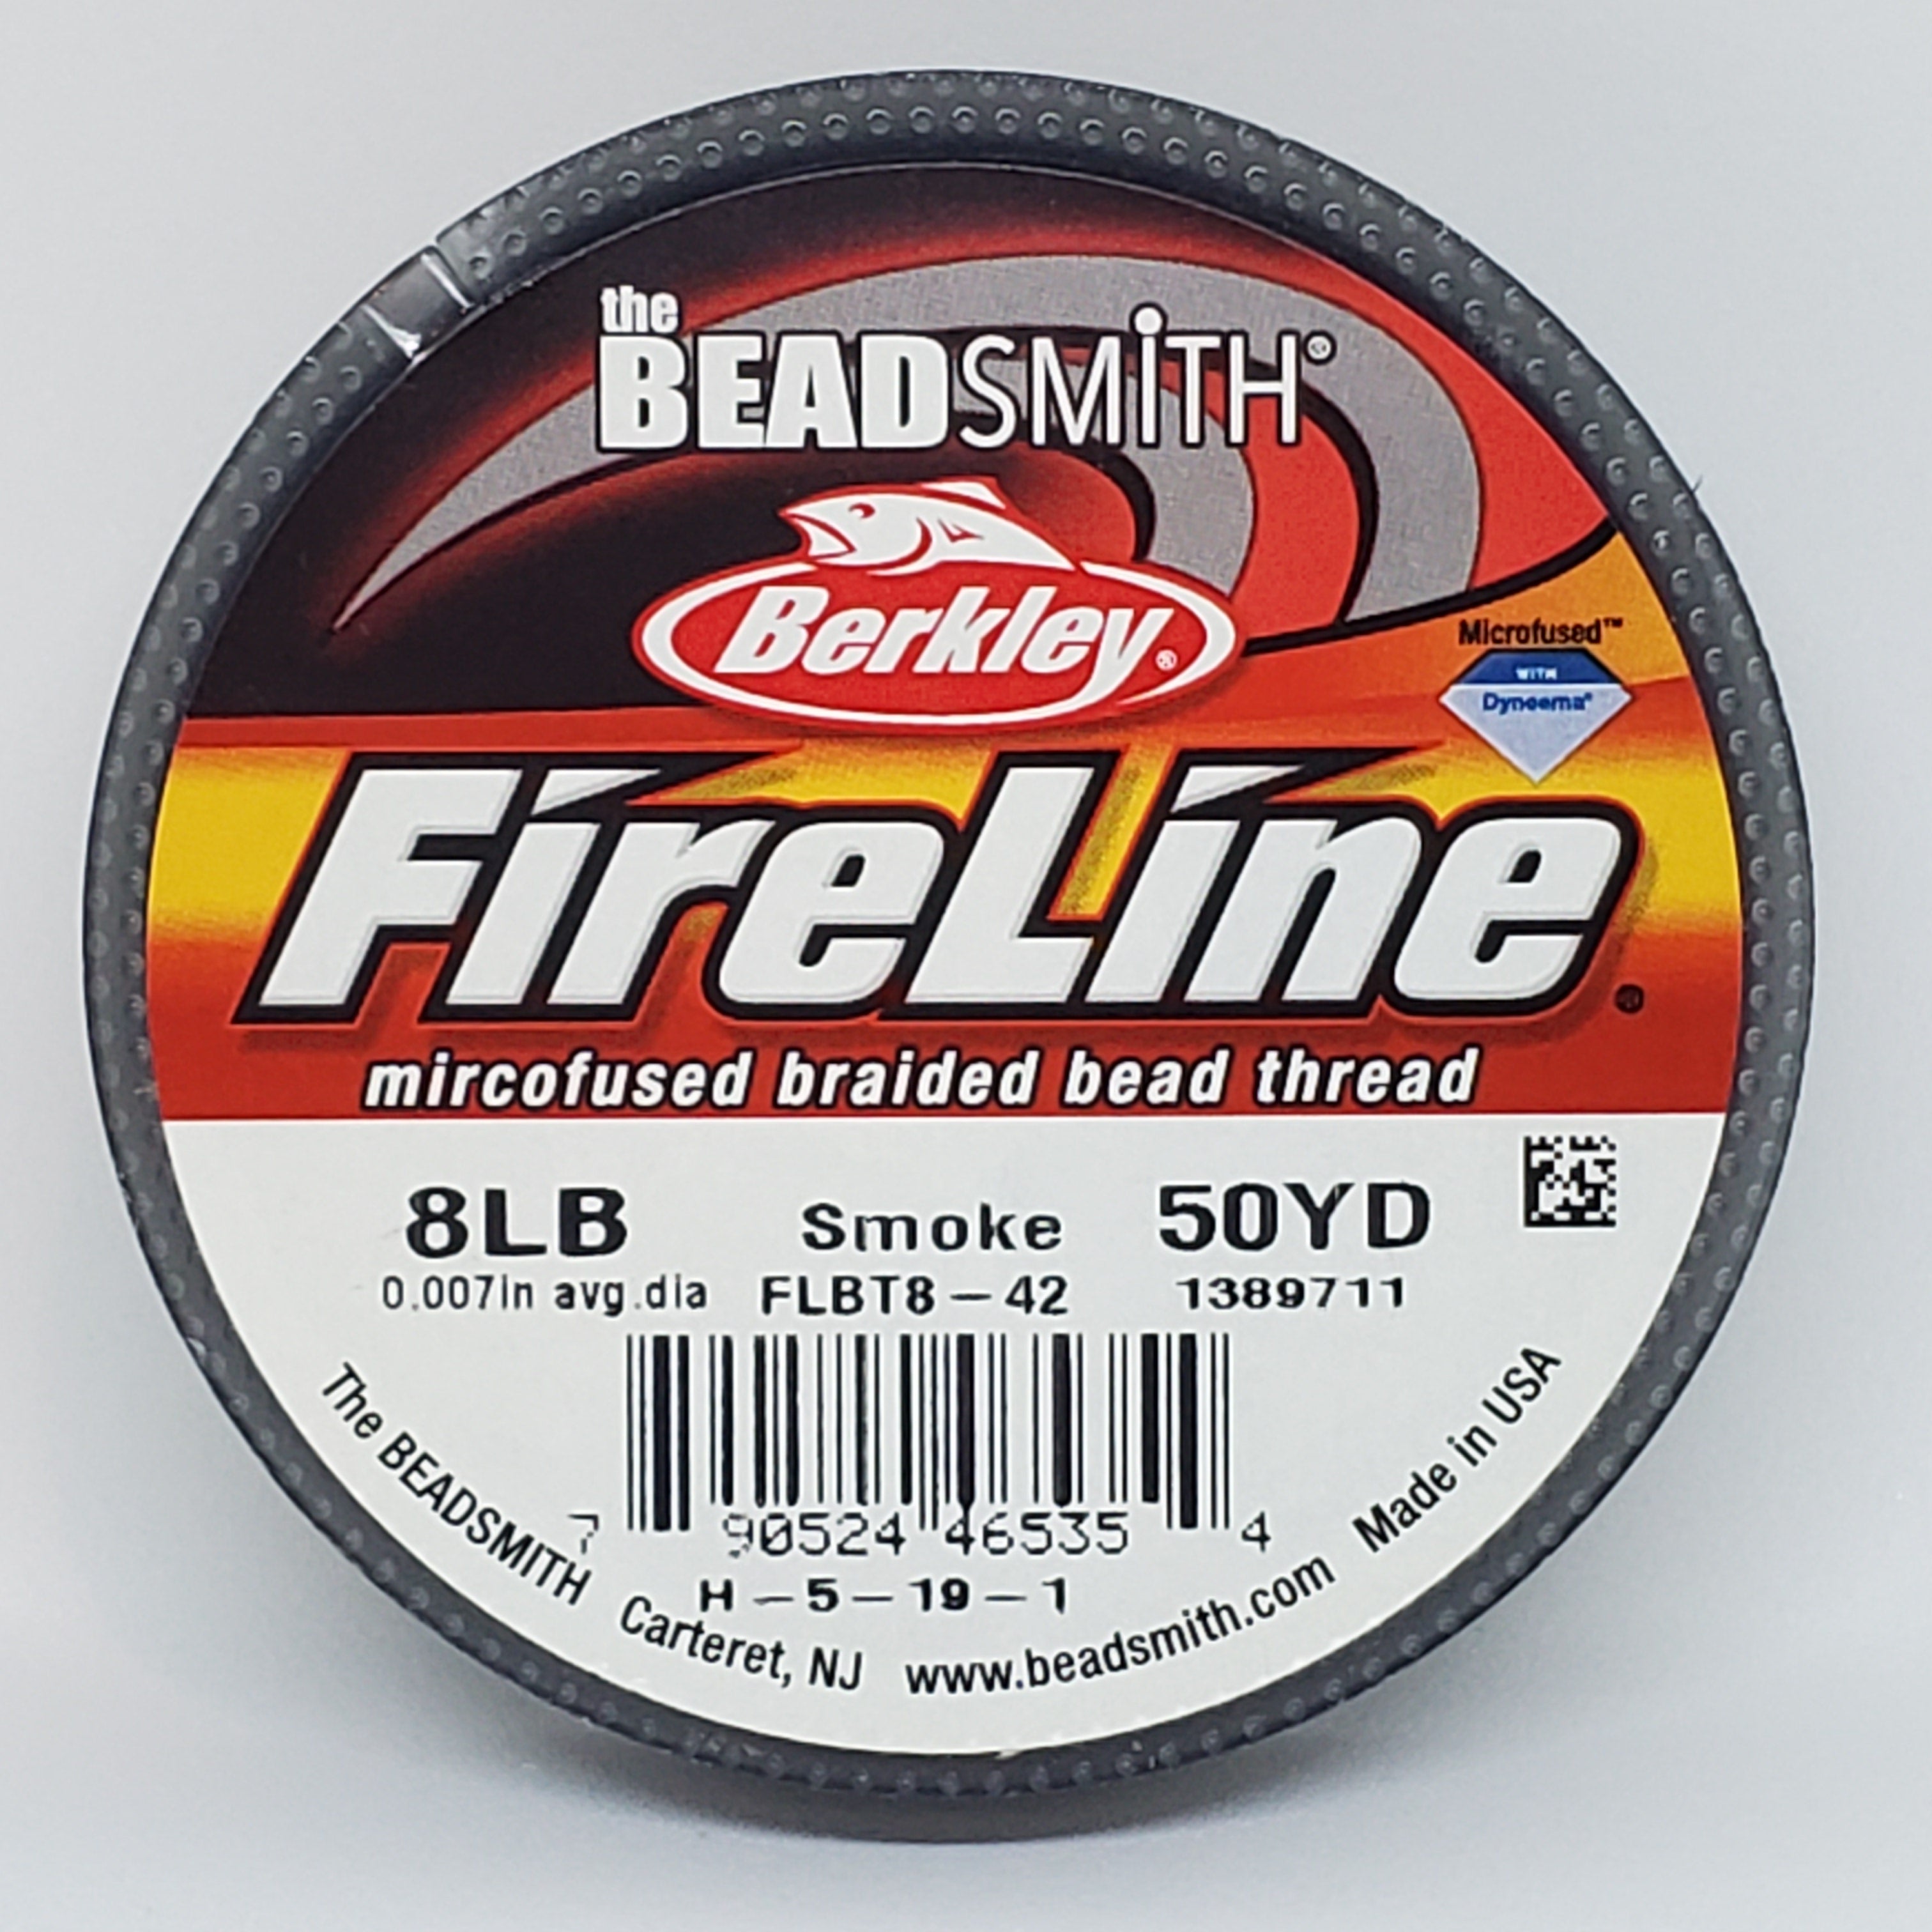 Fireline Thread